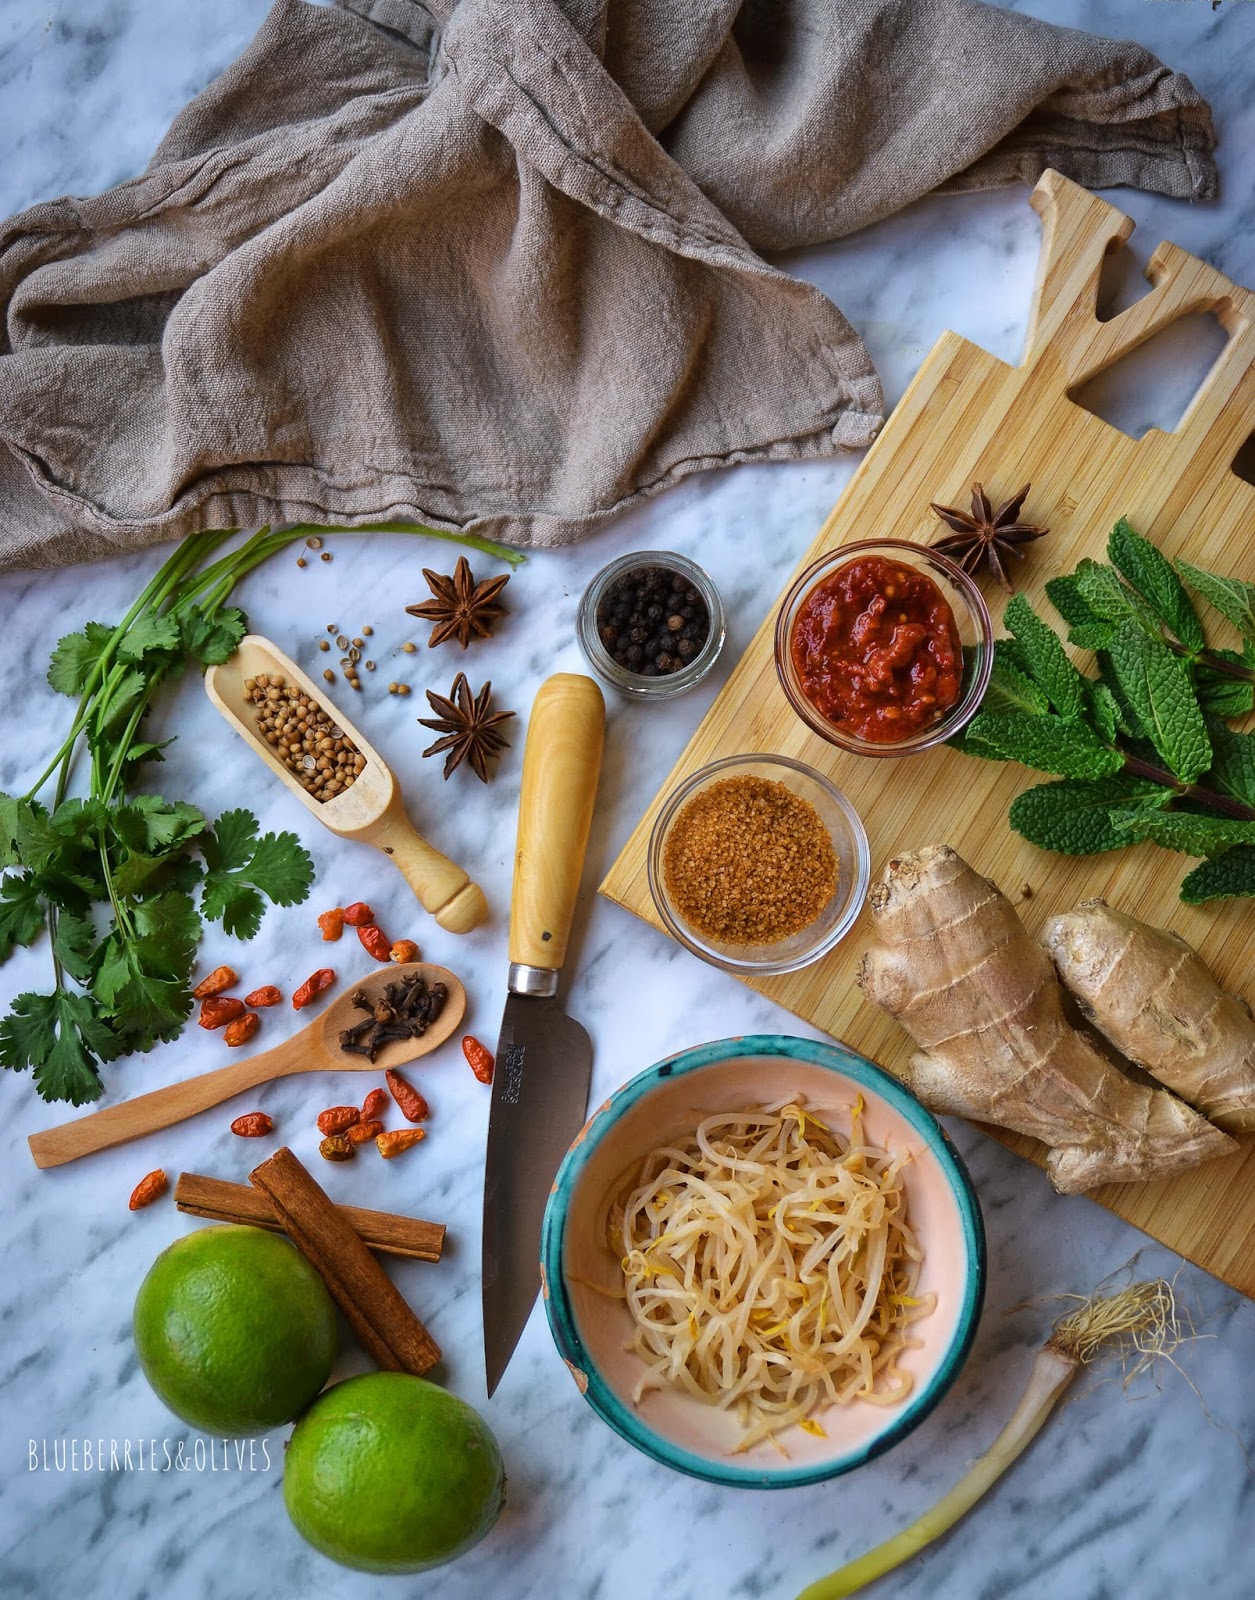 INGREDIENTS - PHỞ GÀ: Vietnamese chicken noodle soop